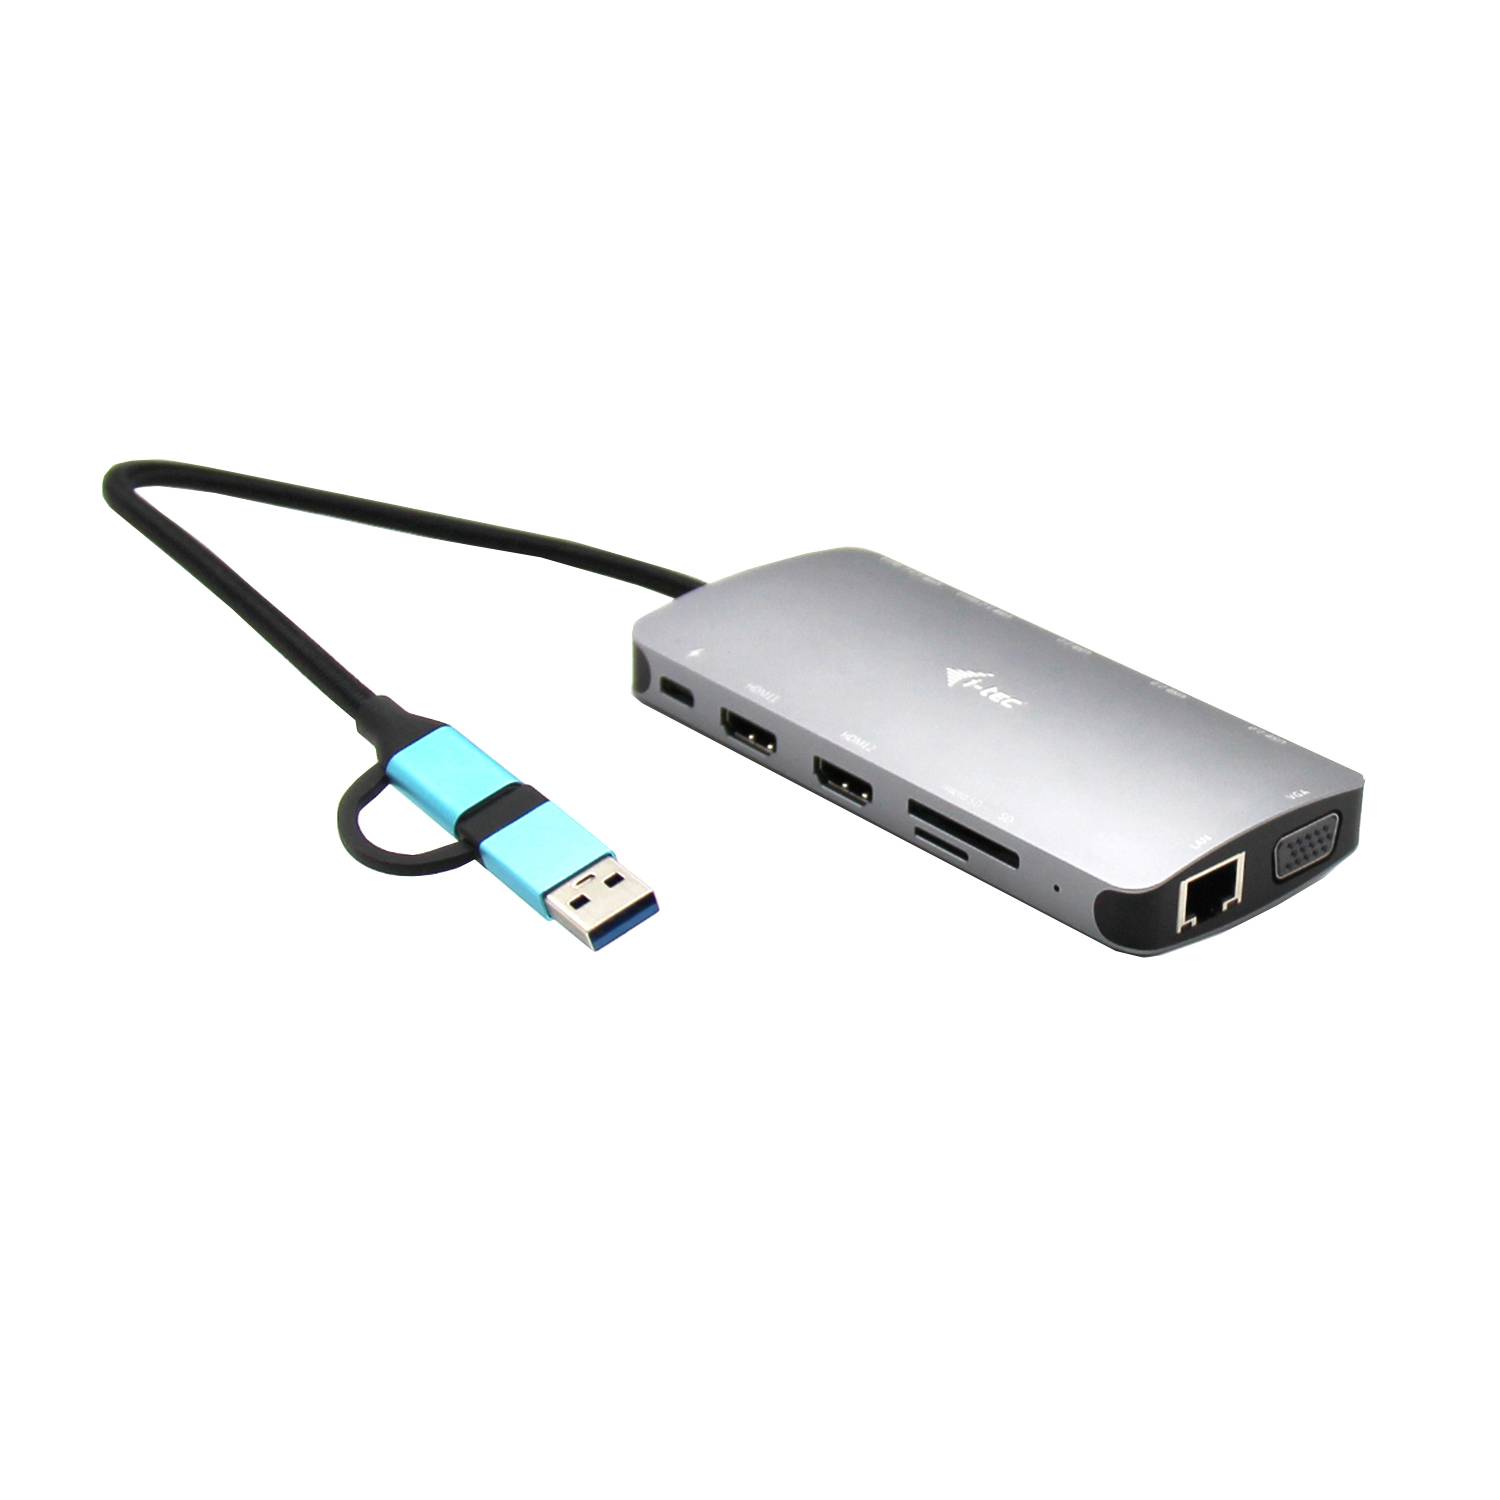 Rca Informatique - Image du produit : I-TEC USB 3.0 3X LCD NANO DOCK USB 3.0 USB-C/TB3 LAN PD 100W